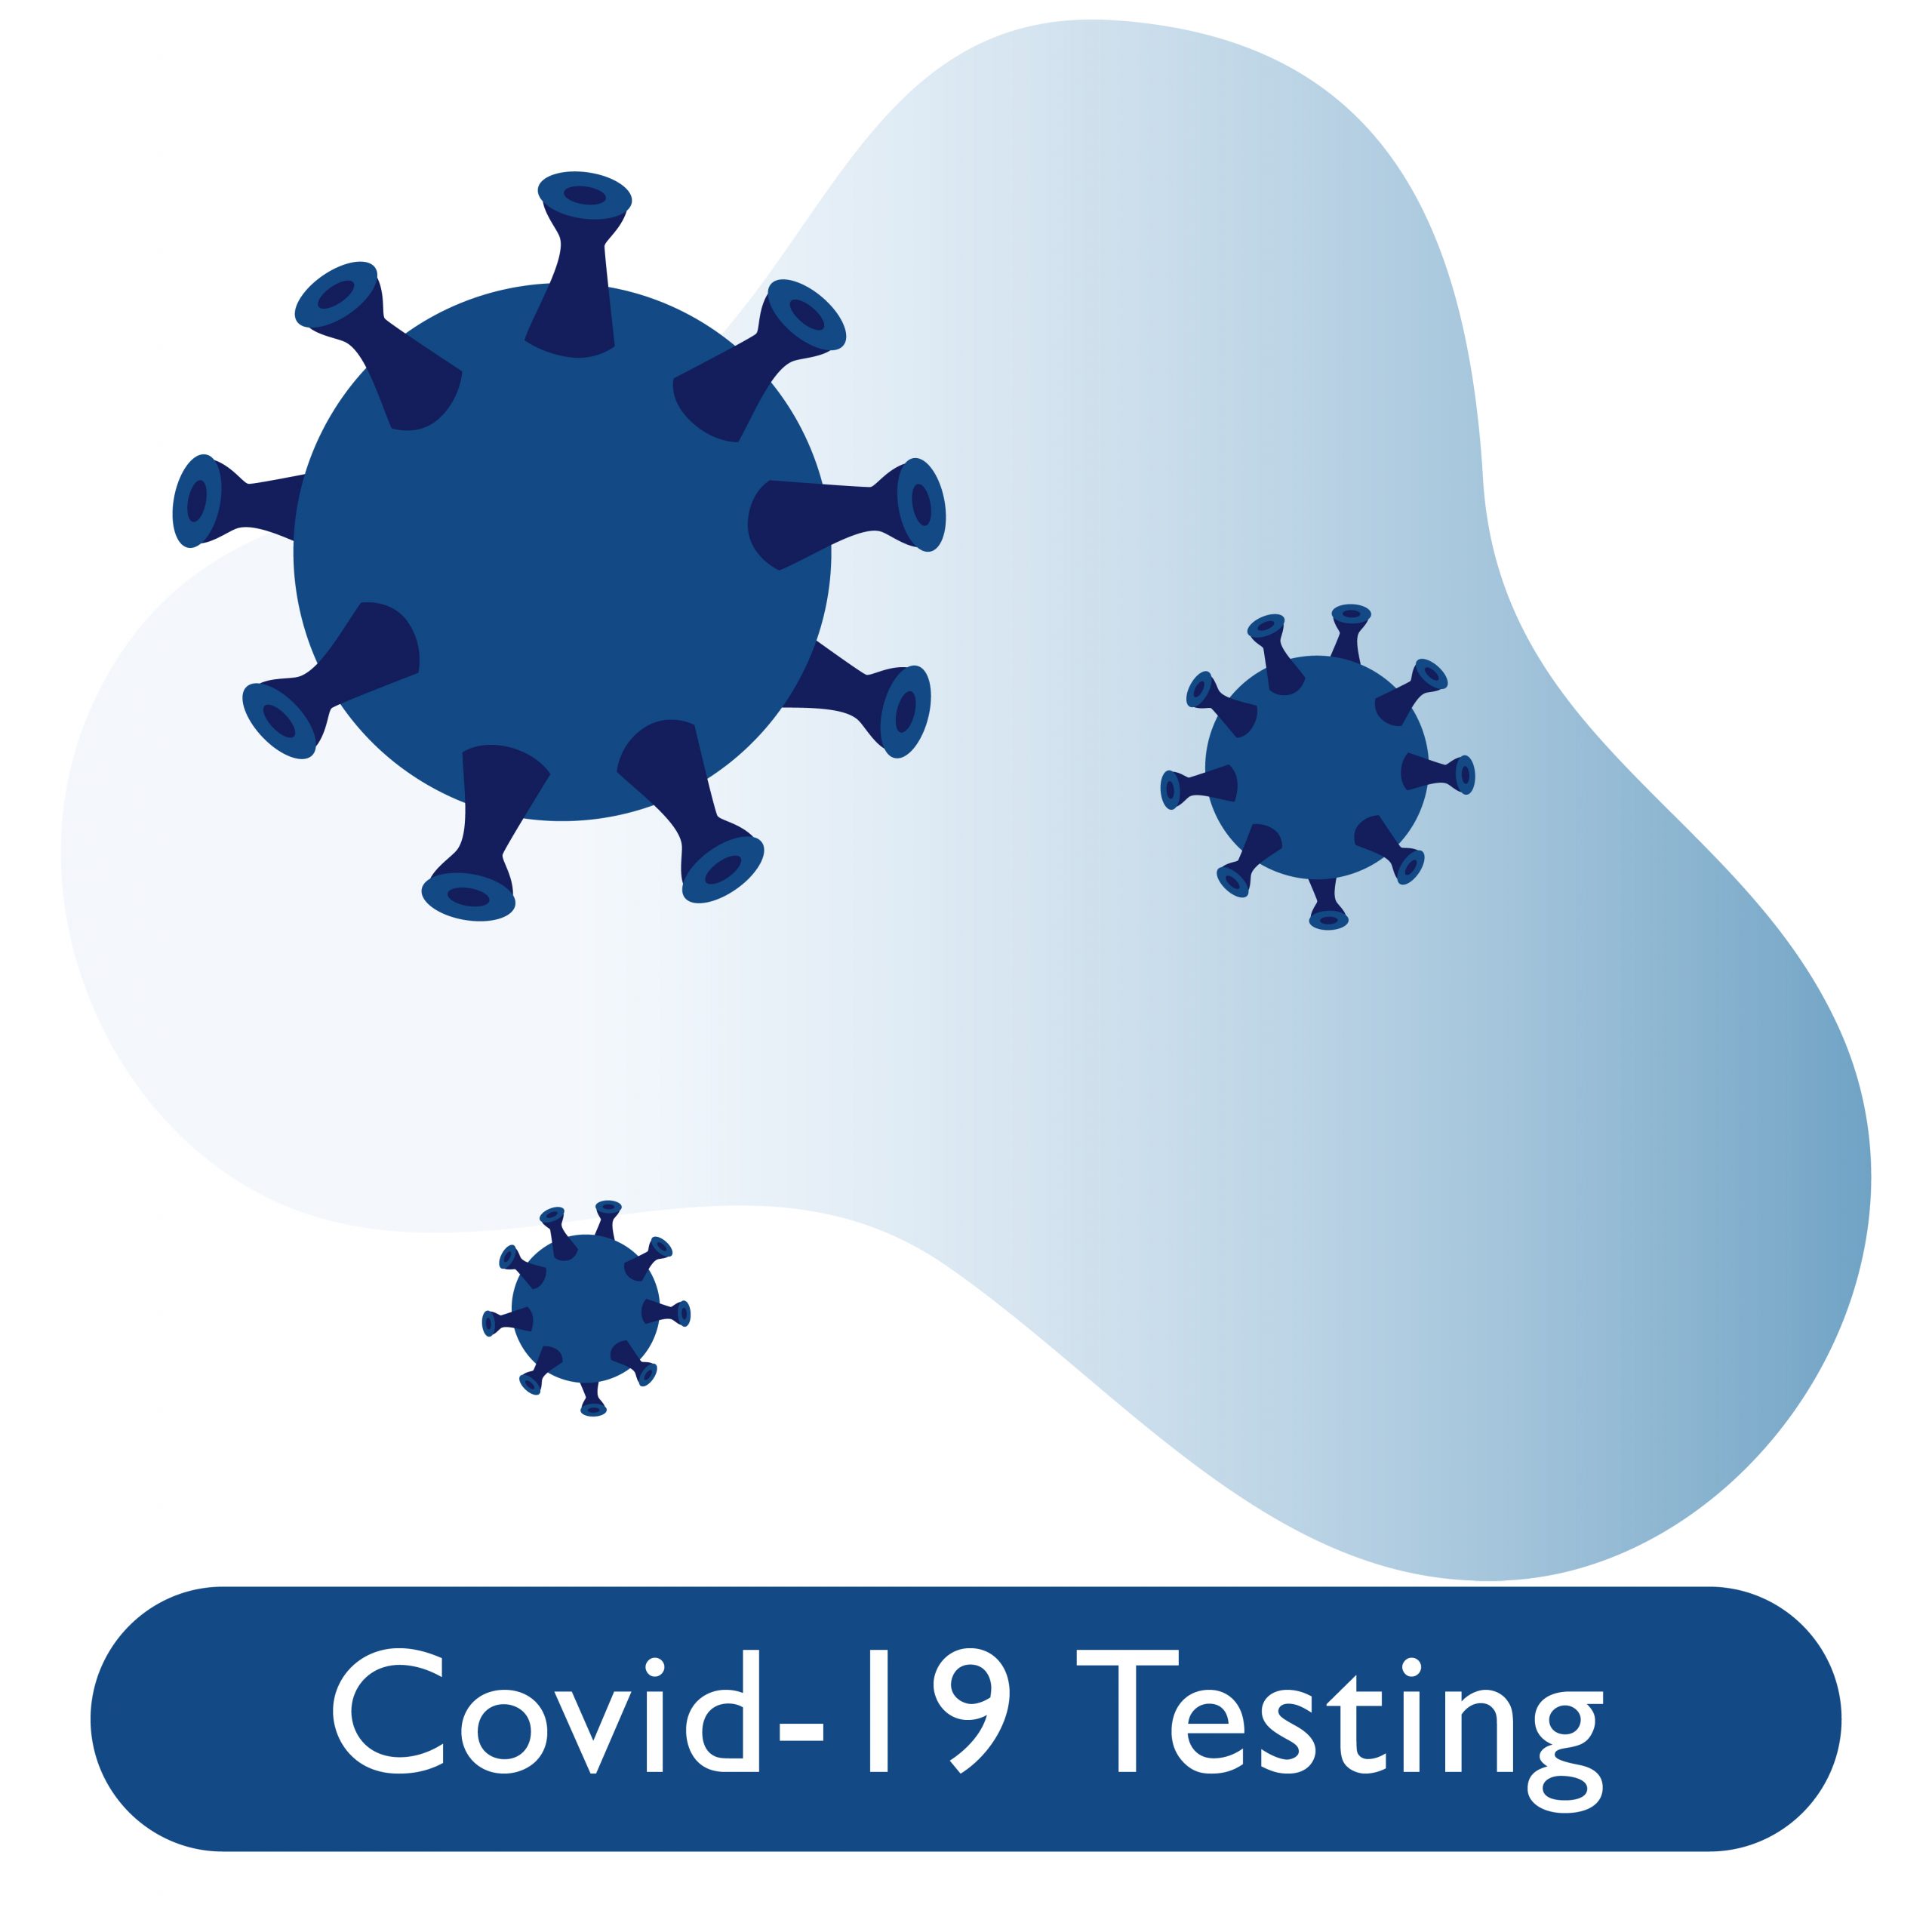 Covid-19 Testing